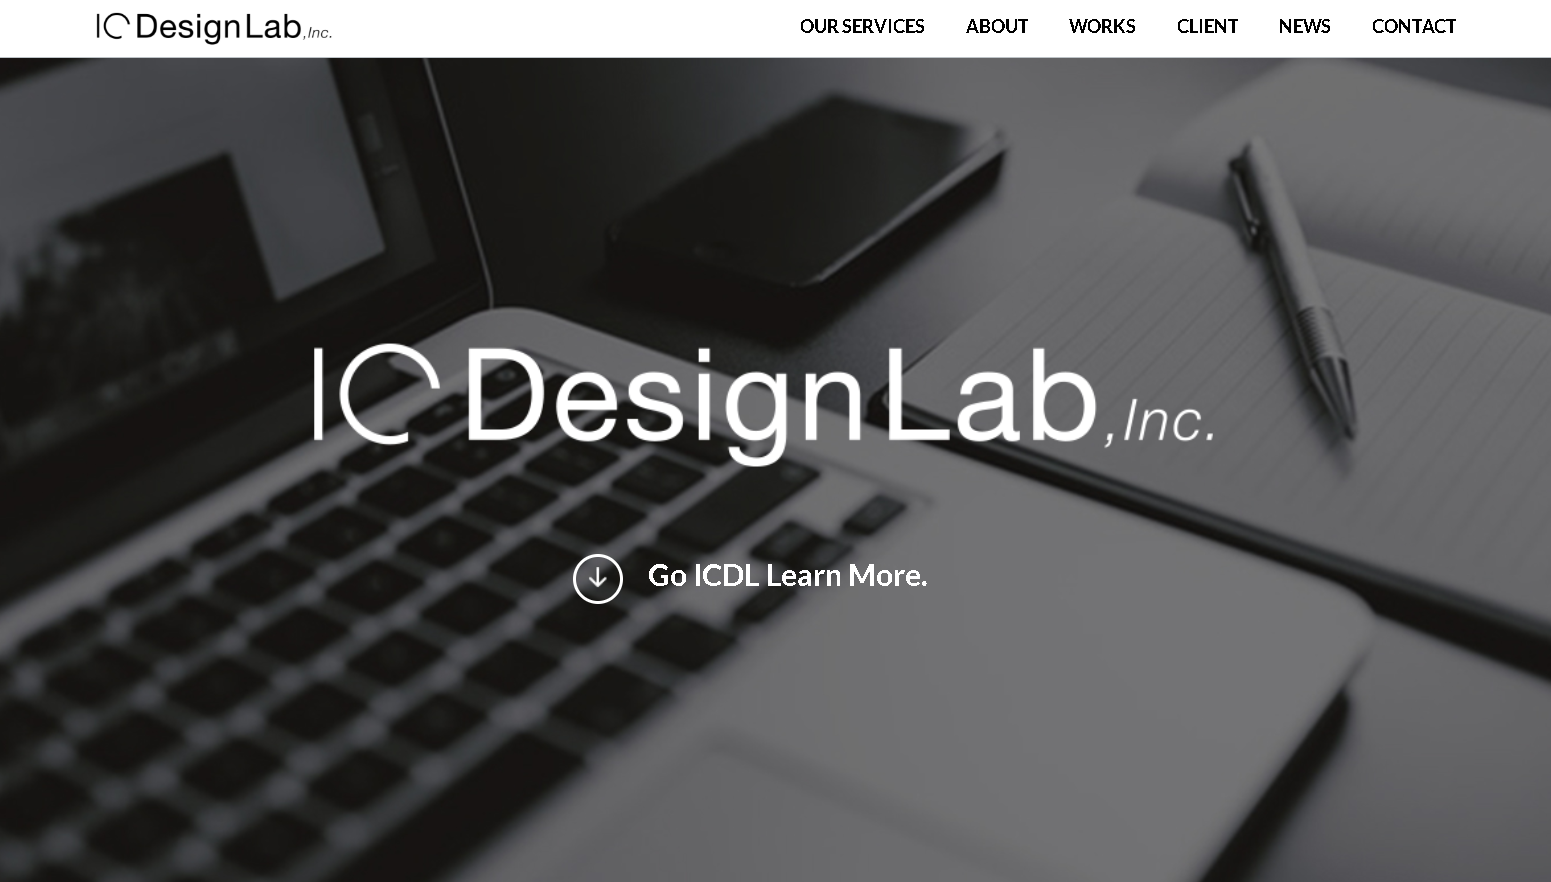 IC Design Lab株式会社のIC Design Lab株式会社サービス